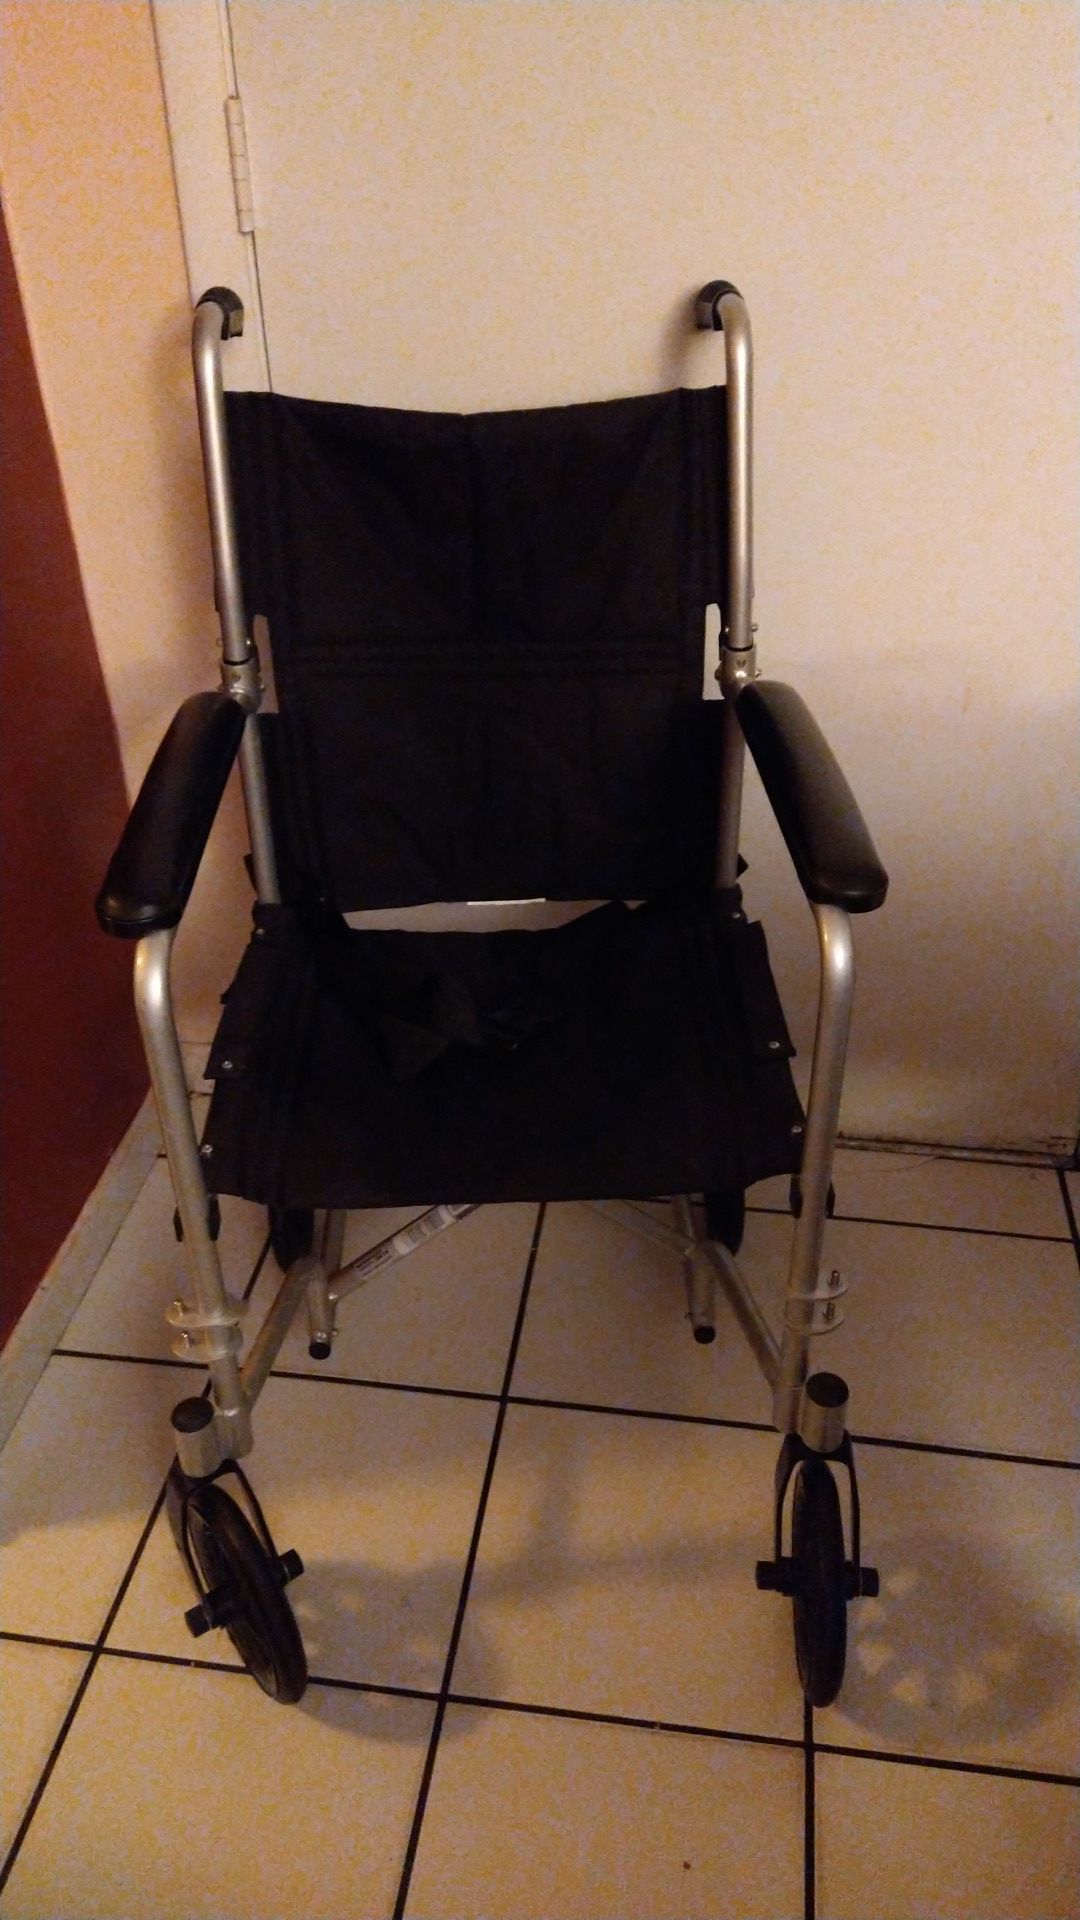 Transport wheelchair